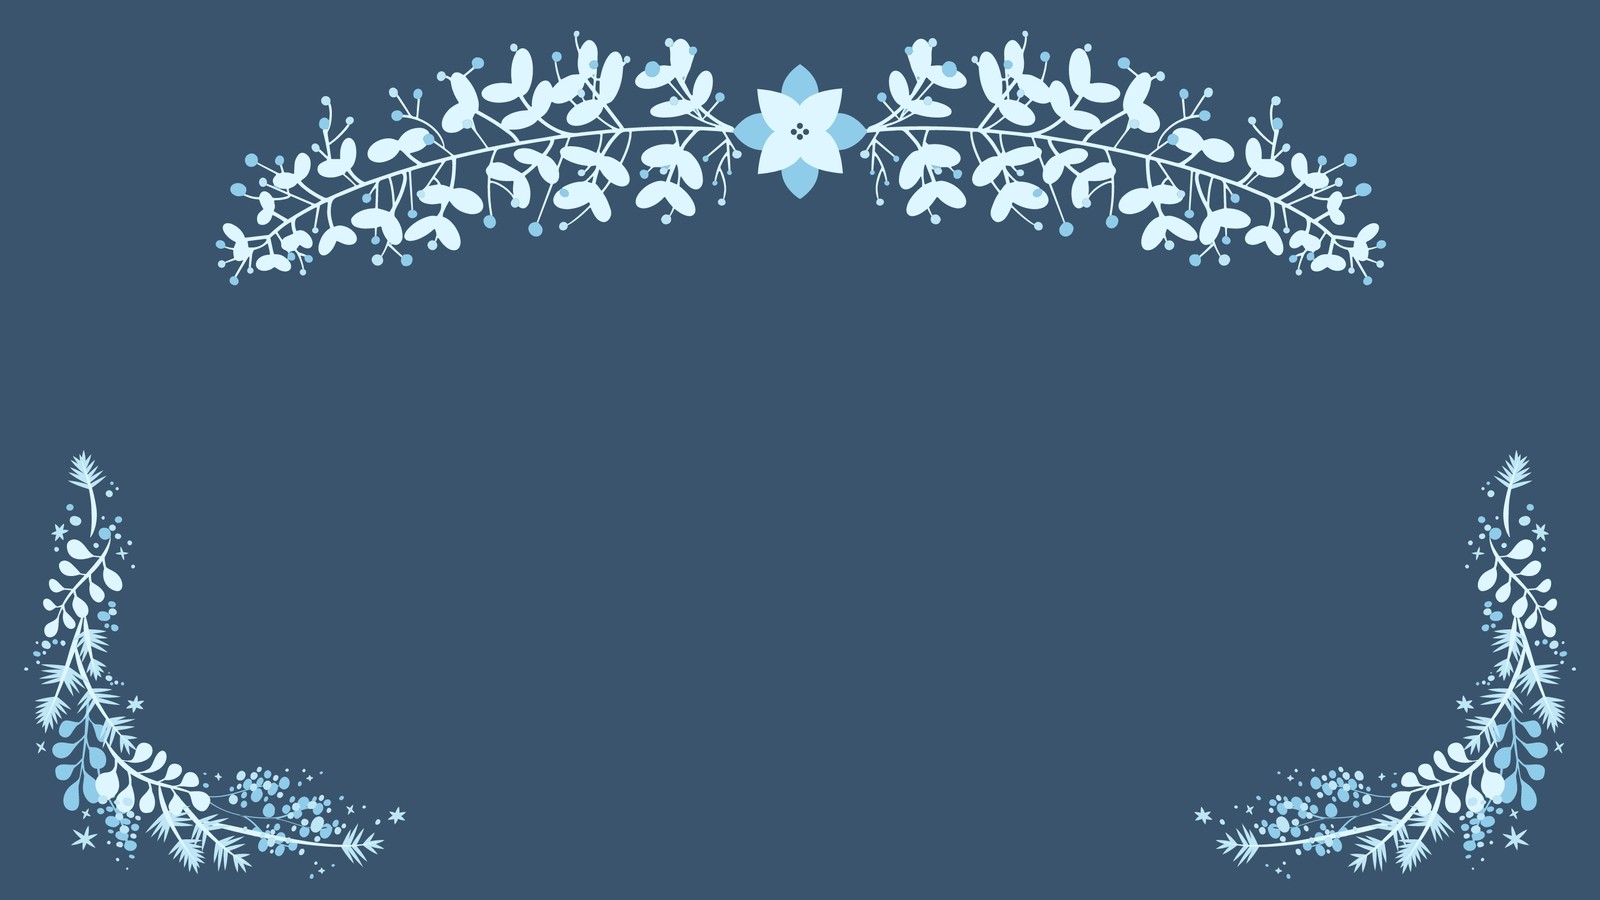 Customize 304+ Christmas Desktop Wallpaper Templates Online - Canva